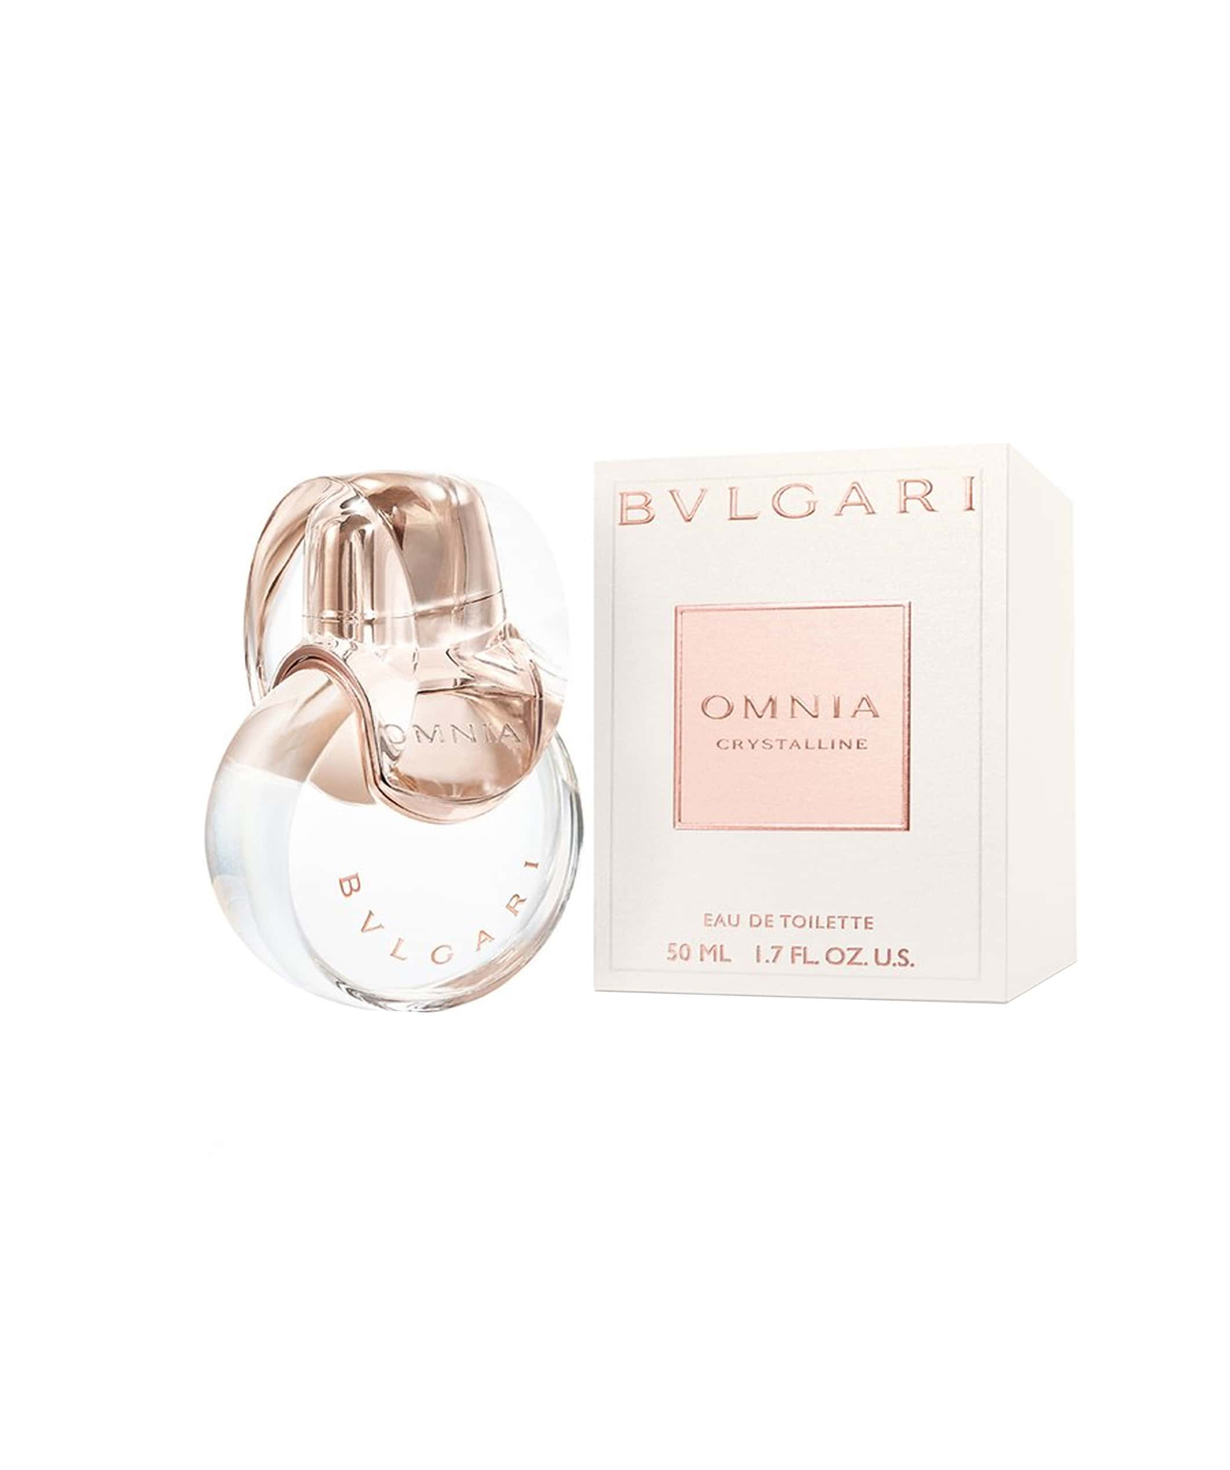 Perfume «Bvlgari» Omnia Crystalline, for women, 50 ml